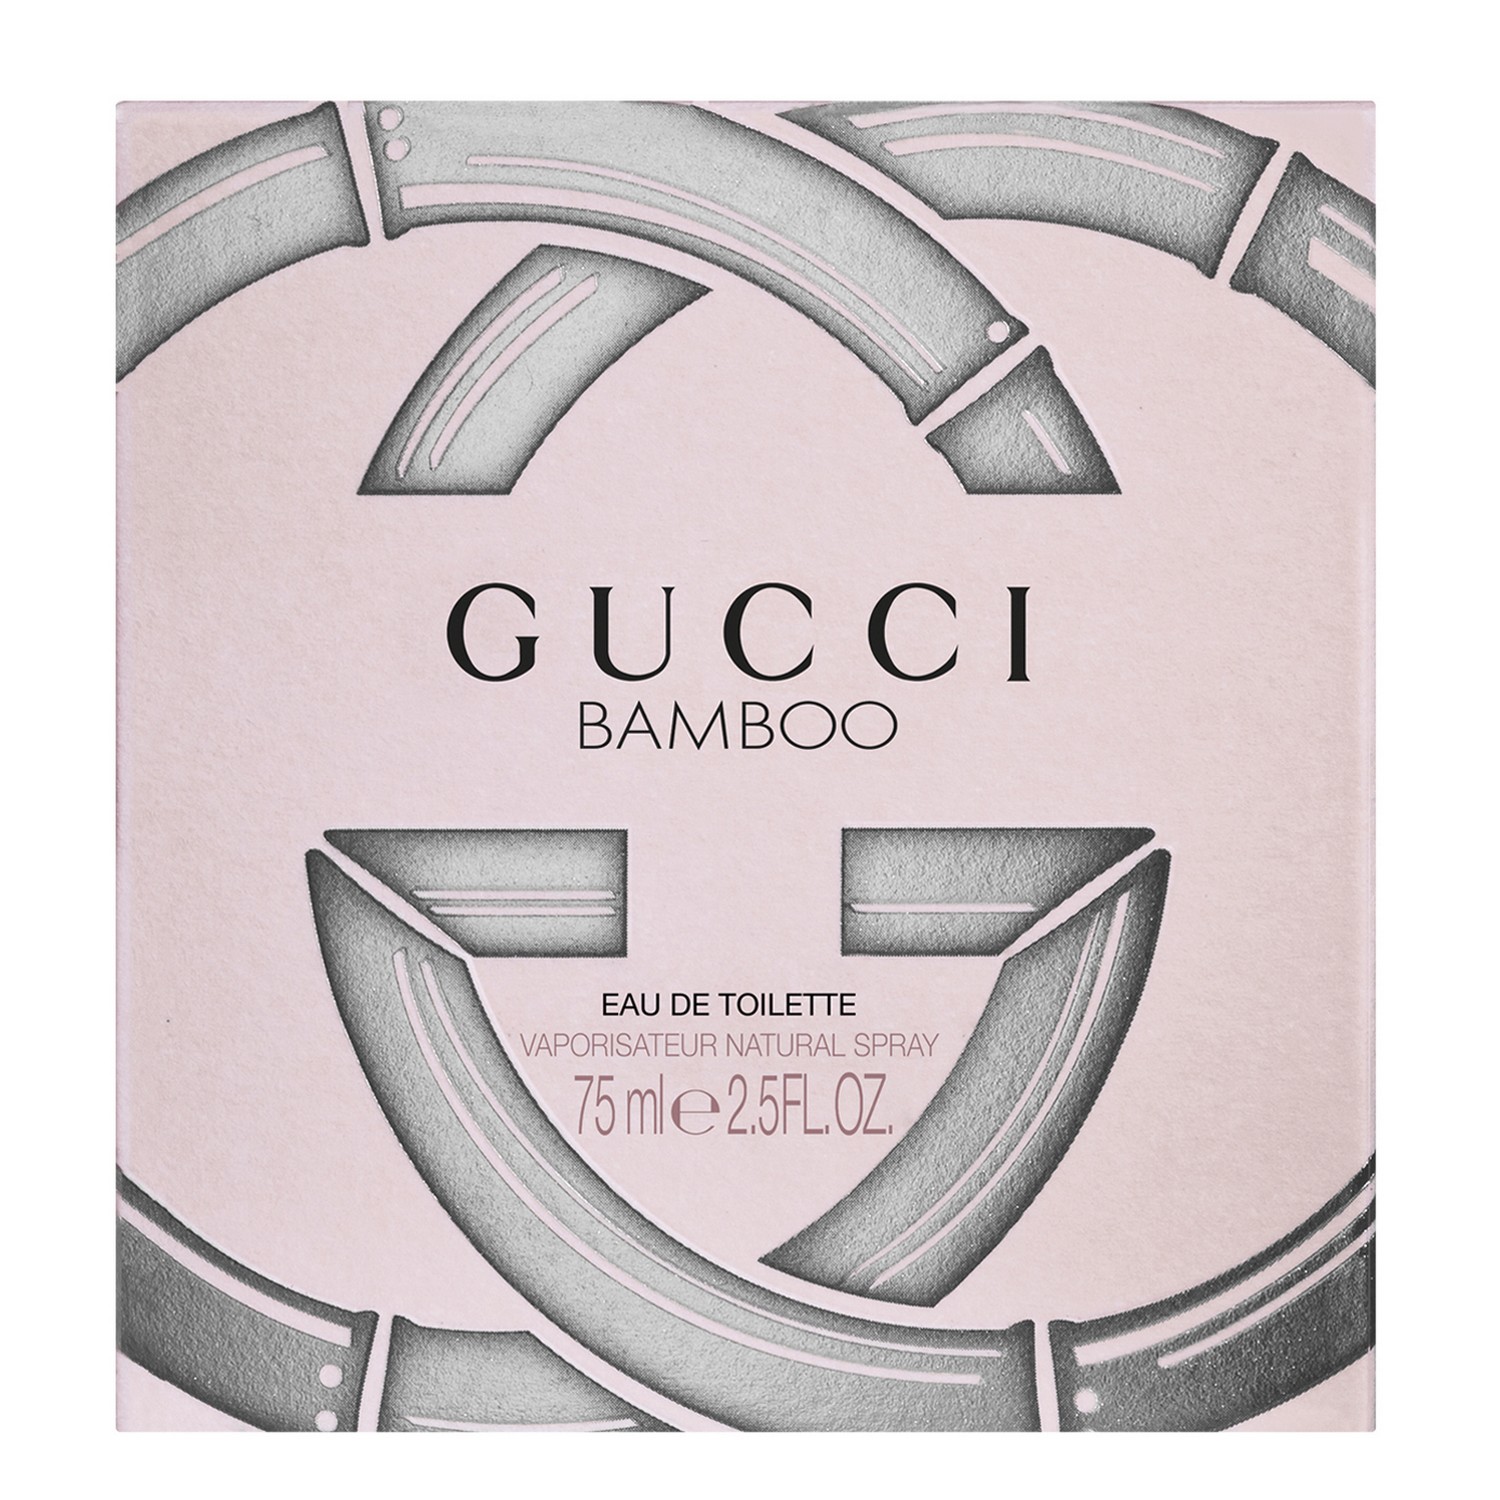 Gucci Bamboo Eau de Toilette 75ml